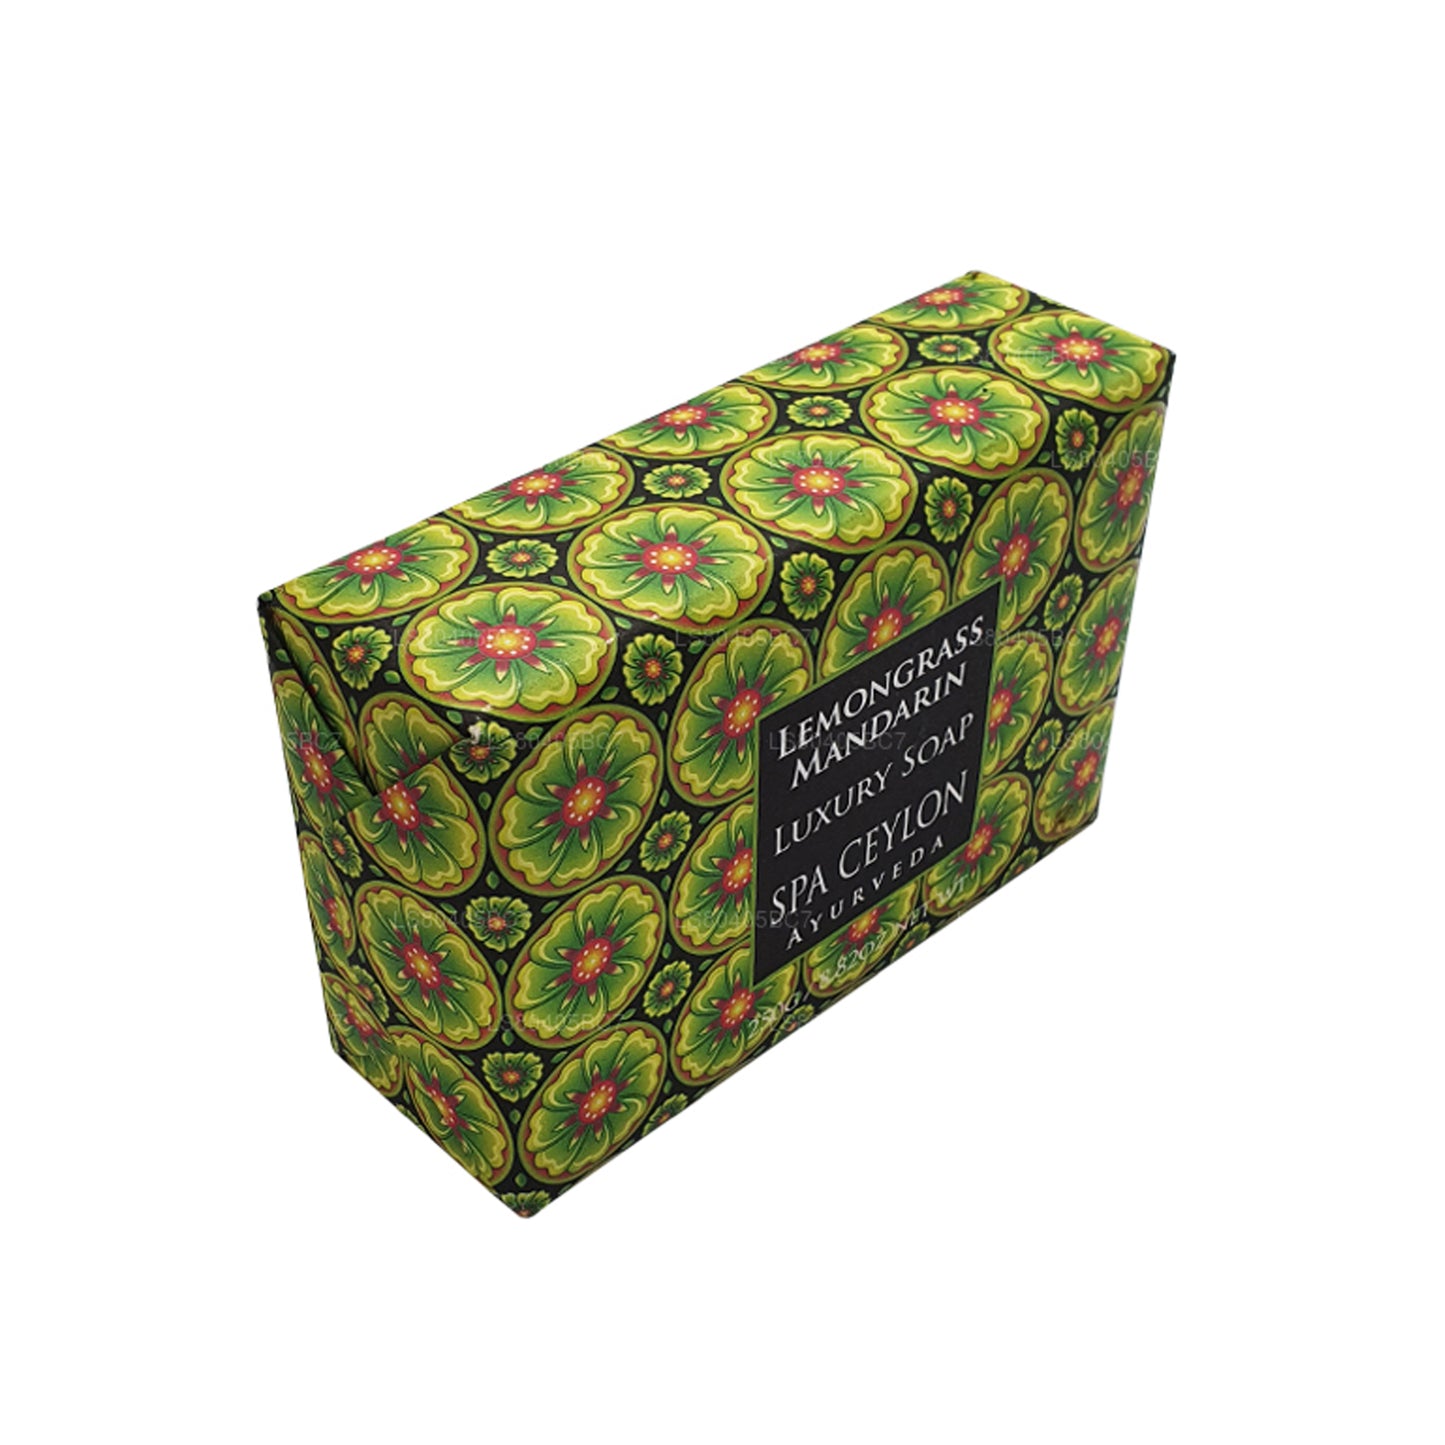 Spa Ceylon Lemongrass Mandarin Luxury Soap (250g)